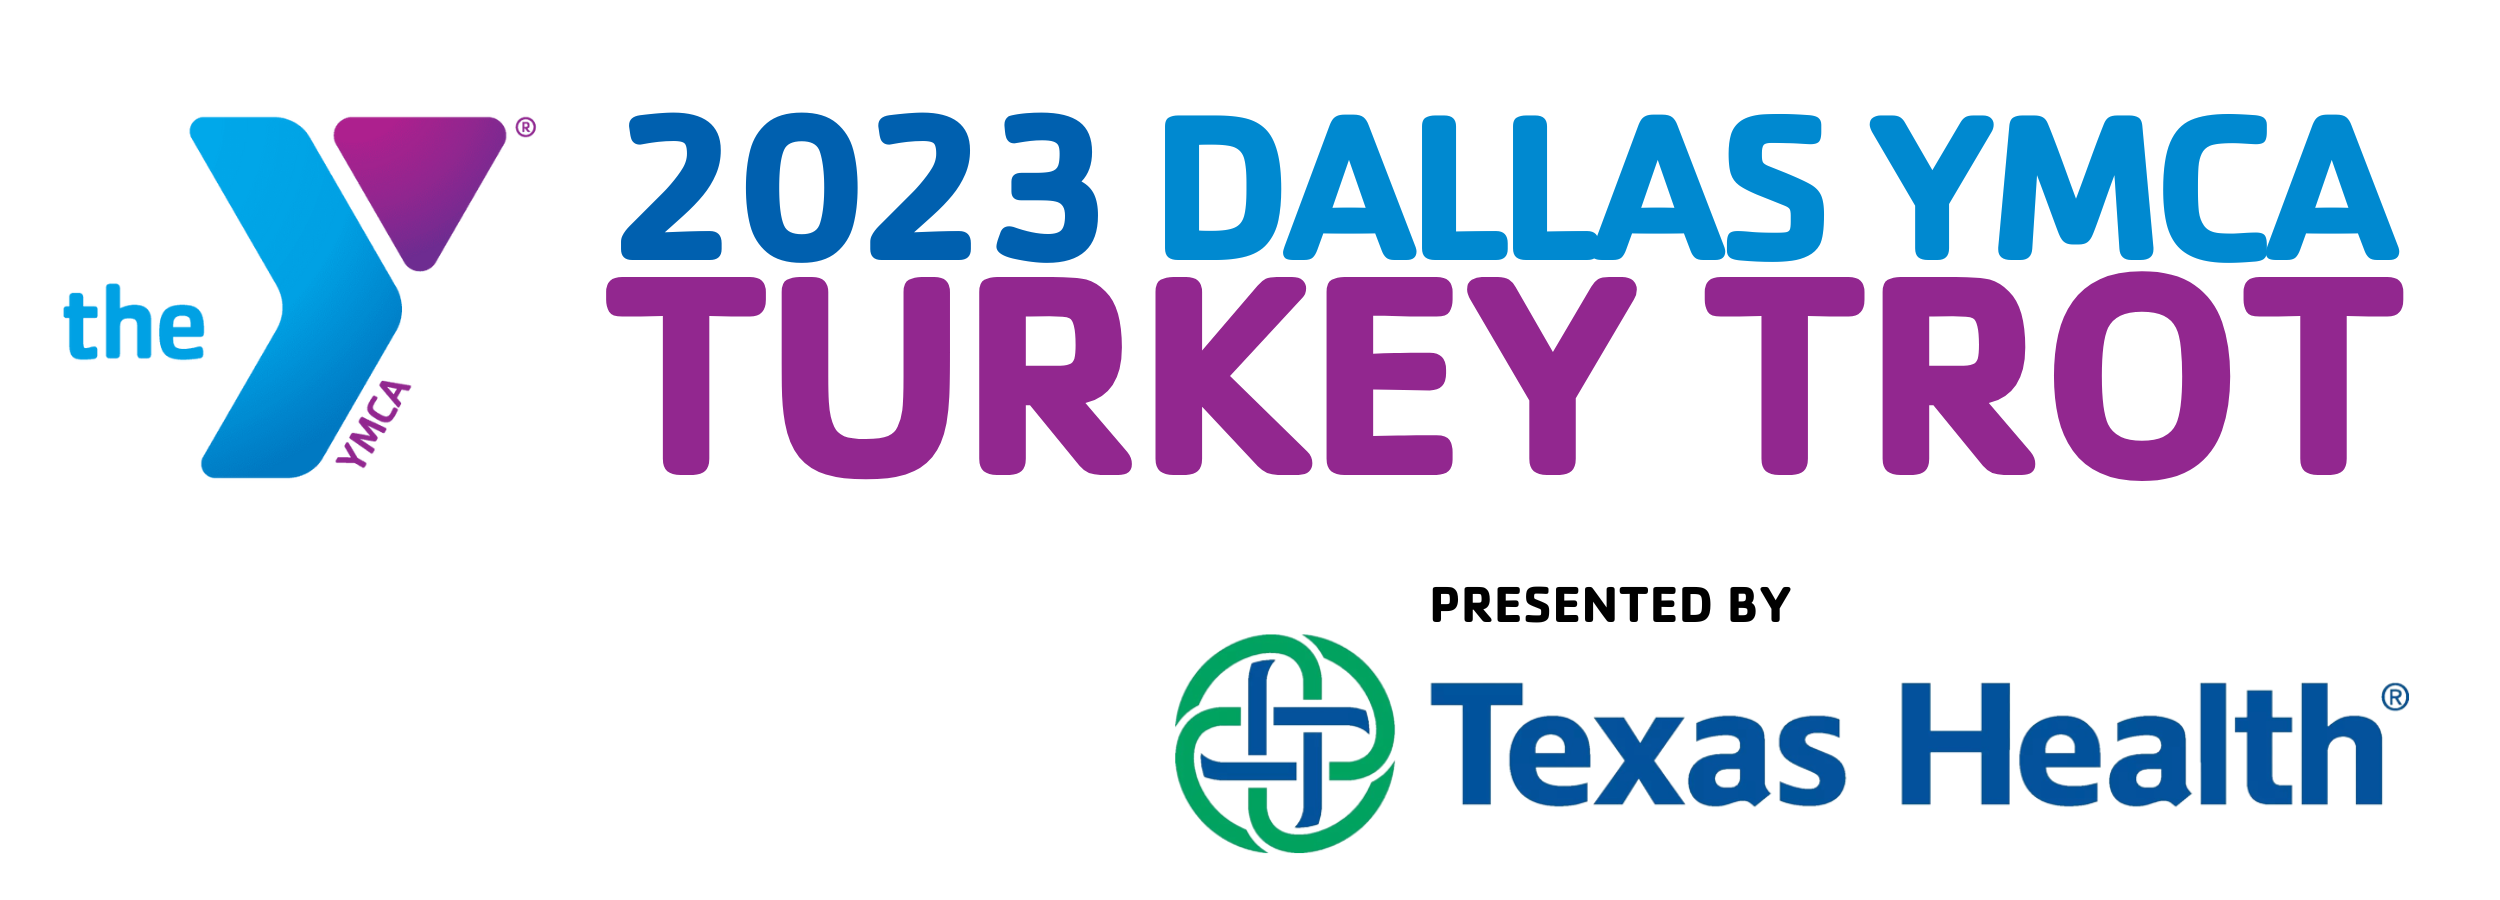 2023 Dallas YMCA Turkey Trot